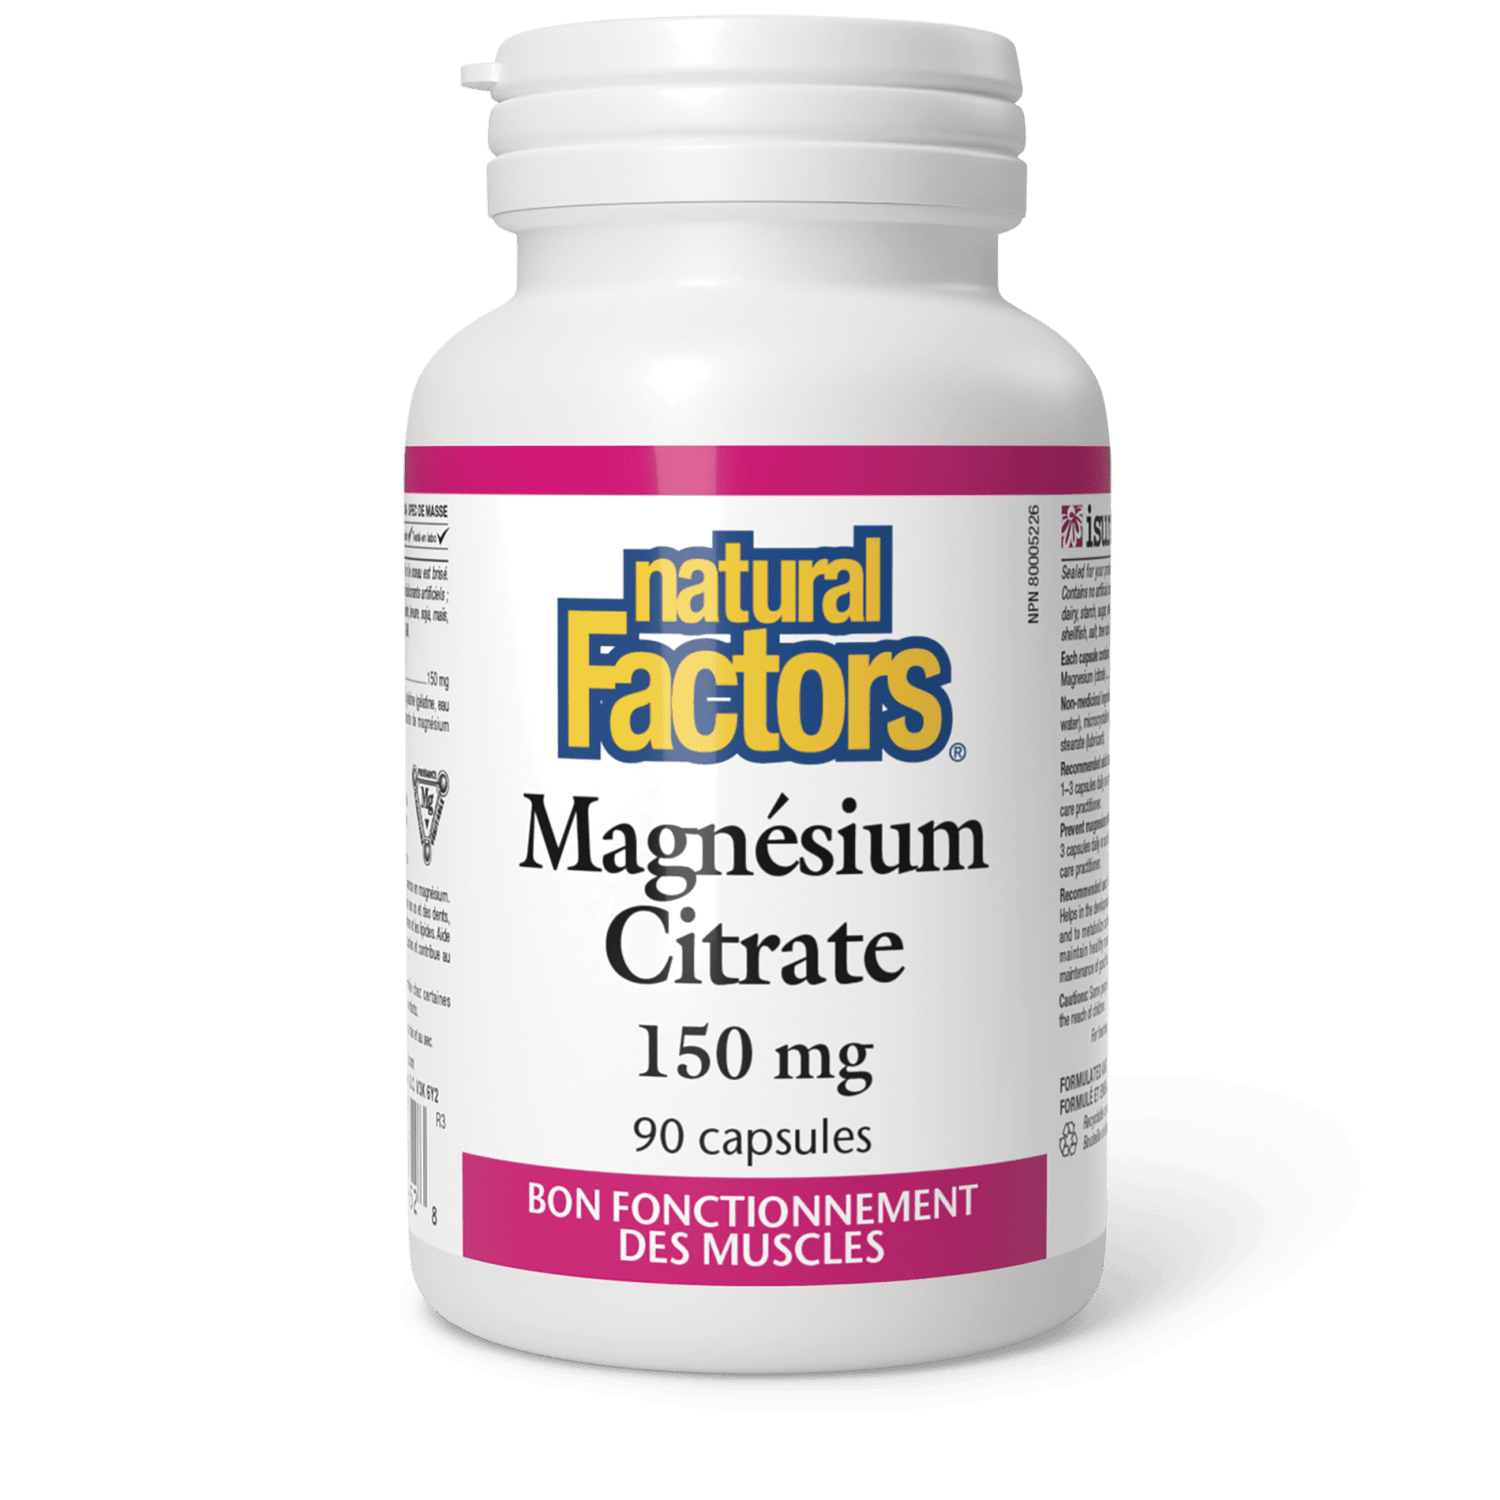 Magnésium Citrate 150 mg, Natural Factors|v|image|1652